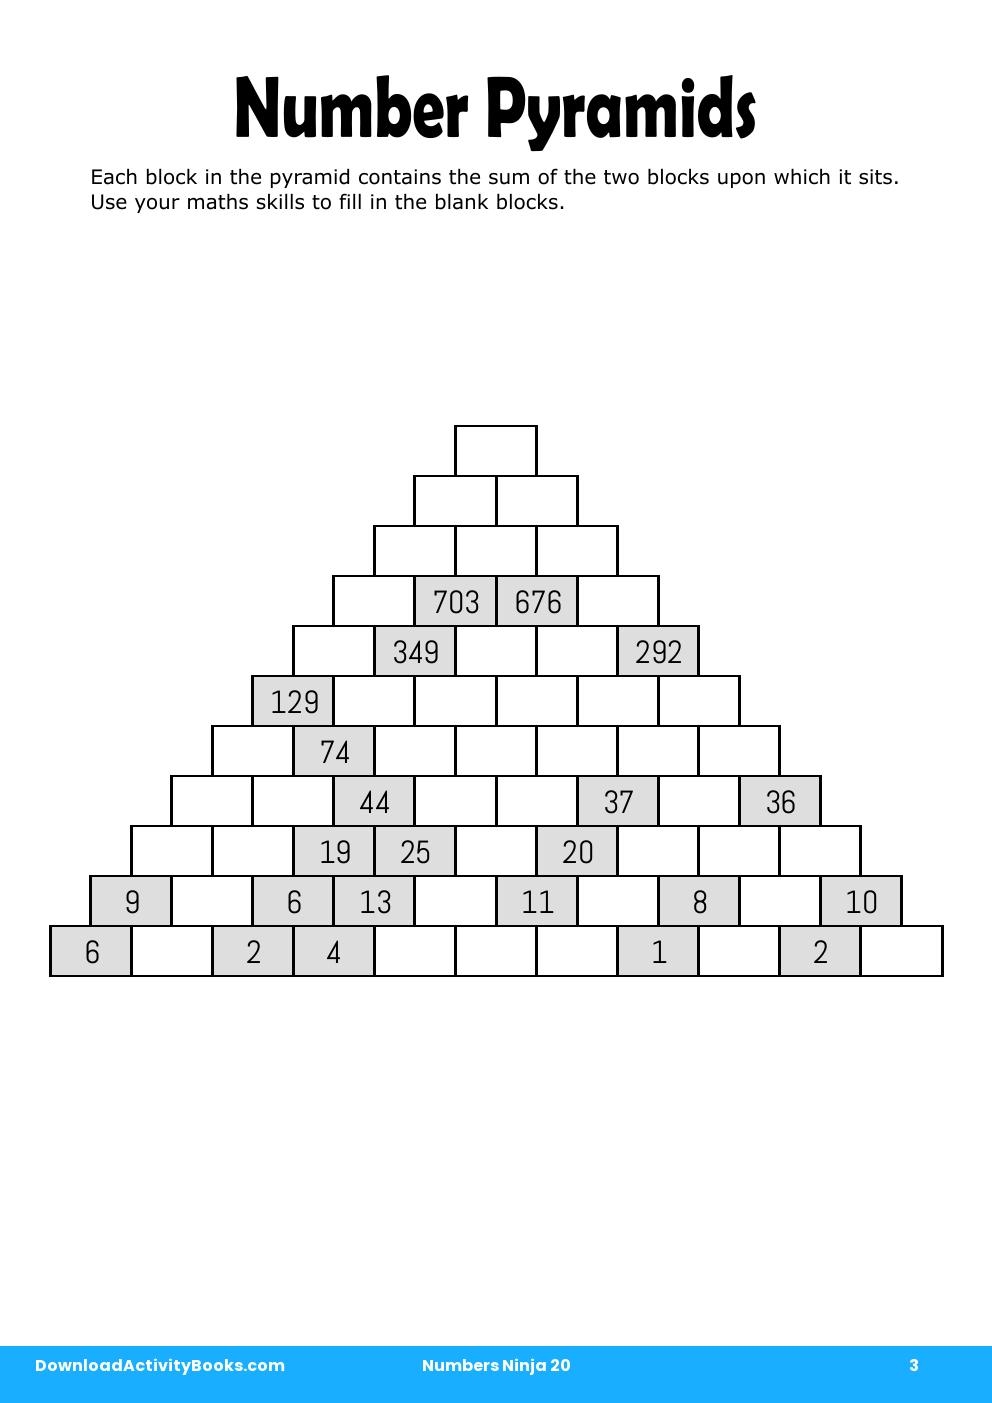 Number Pyramids in Numbers Ninja 20